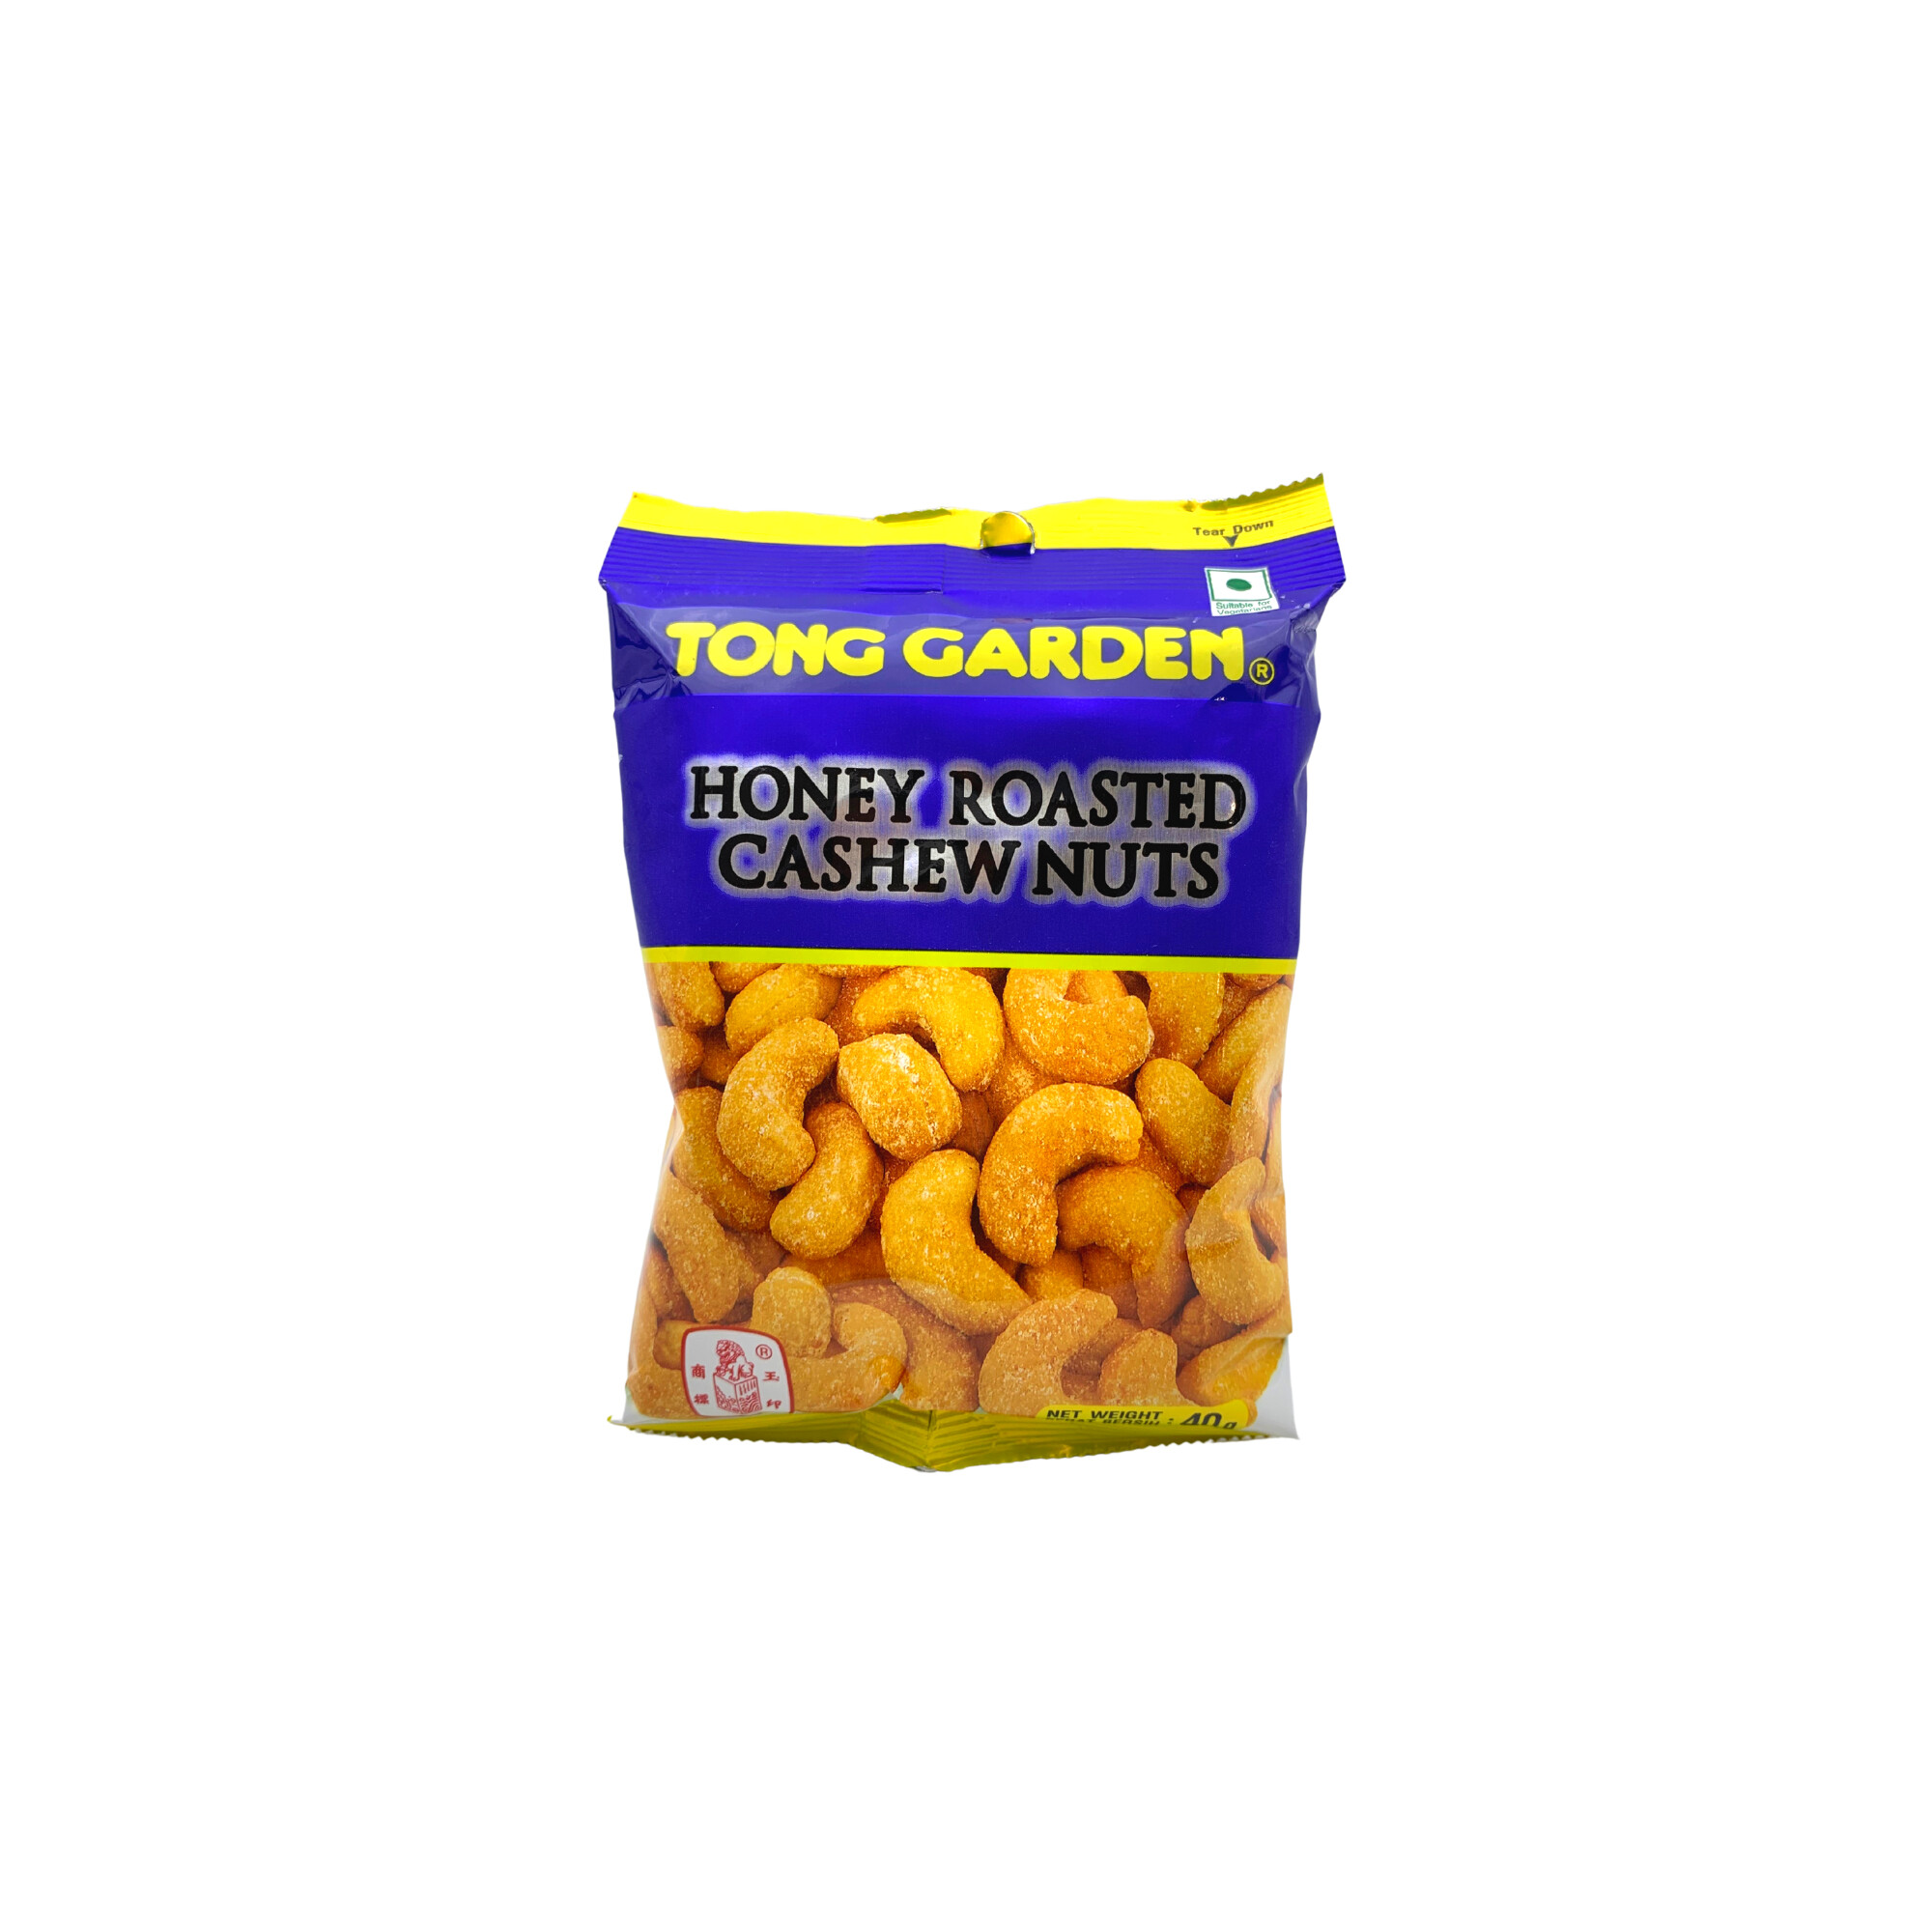 Tong Garden Honey Roasted Cashew Nuts